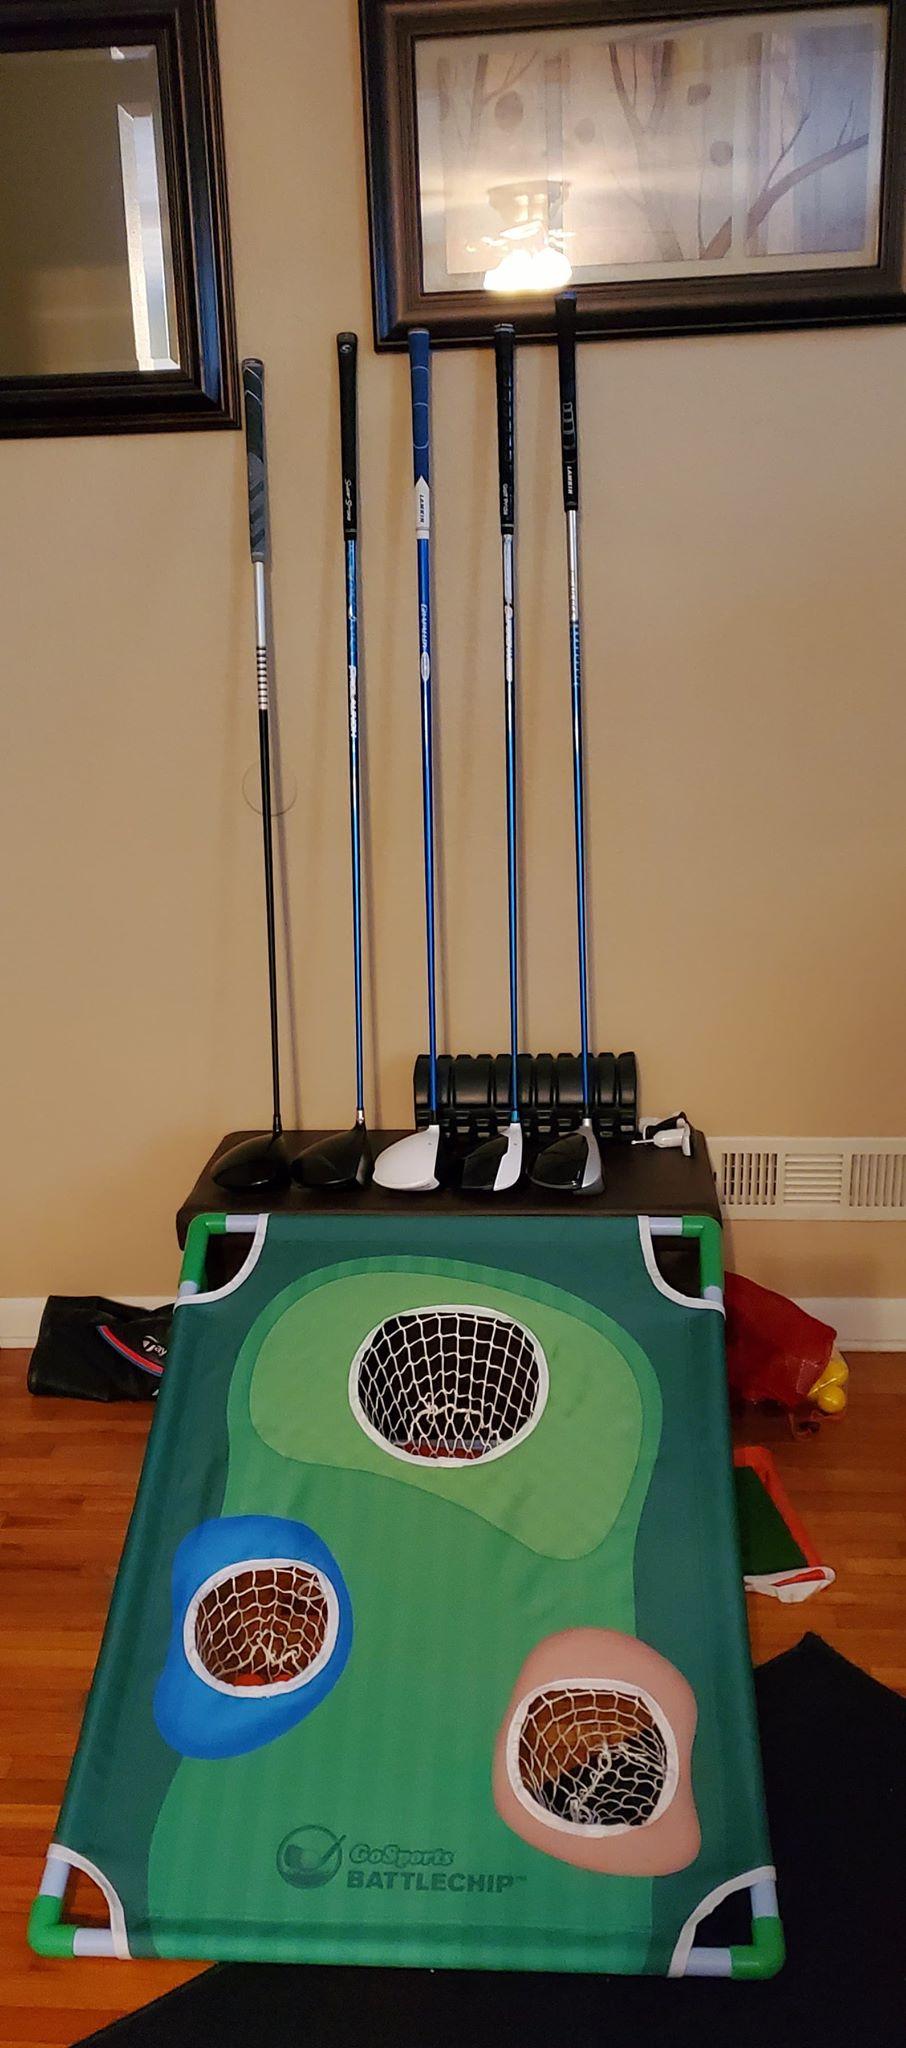 Golf Cornhole Game 2 Board Complete Sets - Golf Chipping Game Bundles